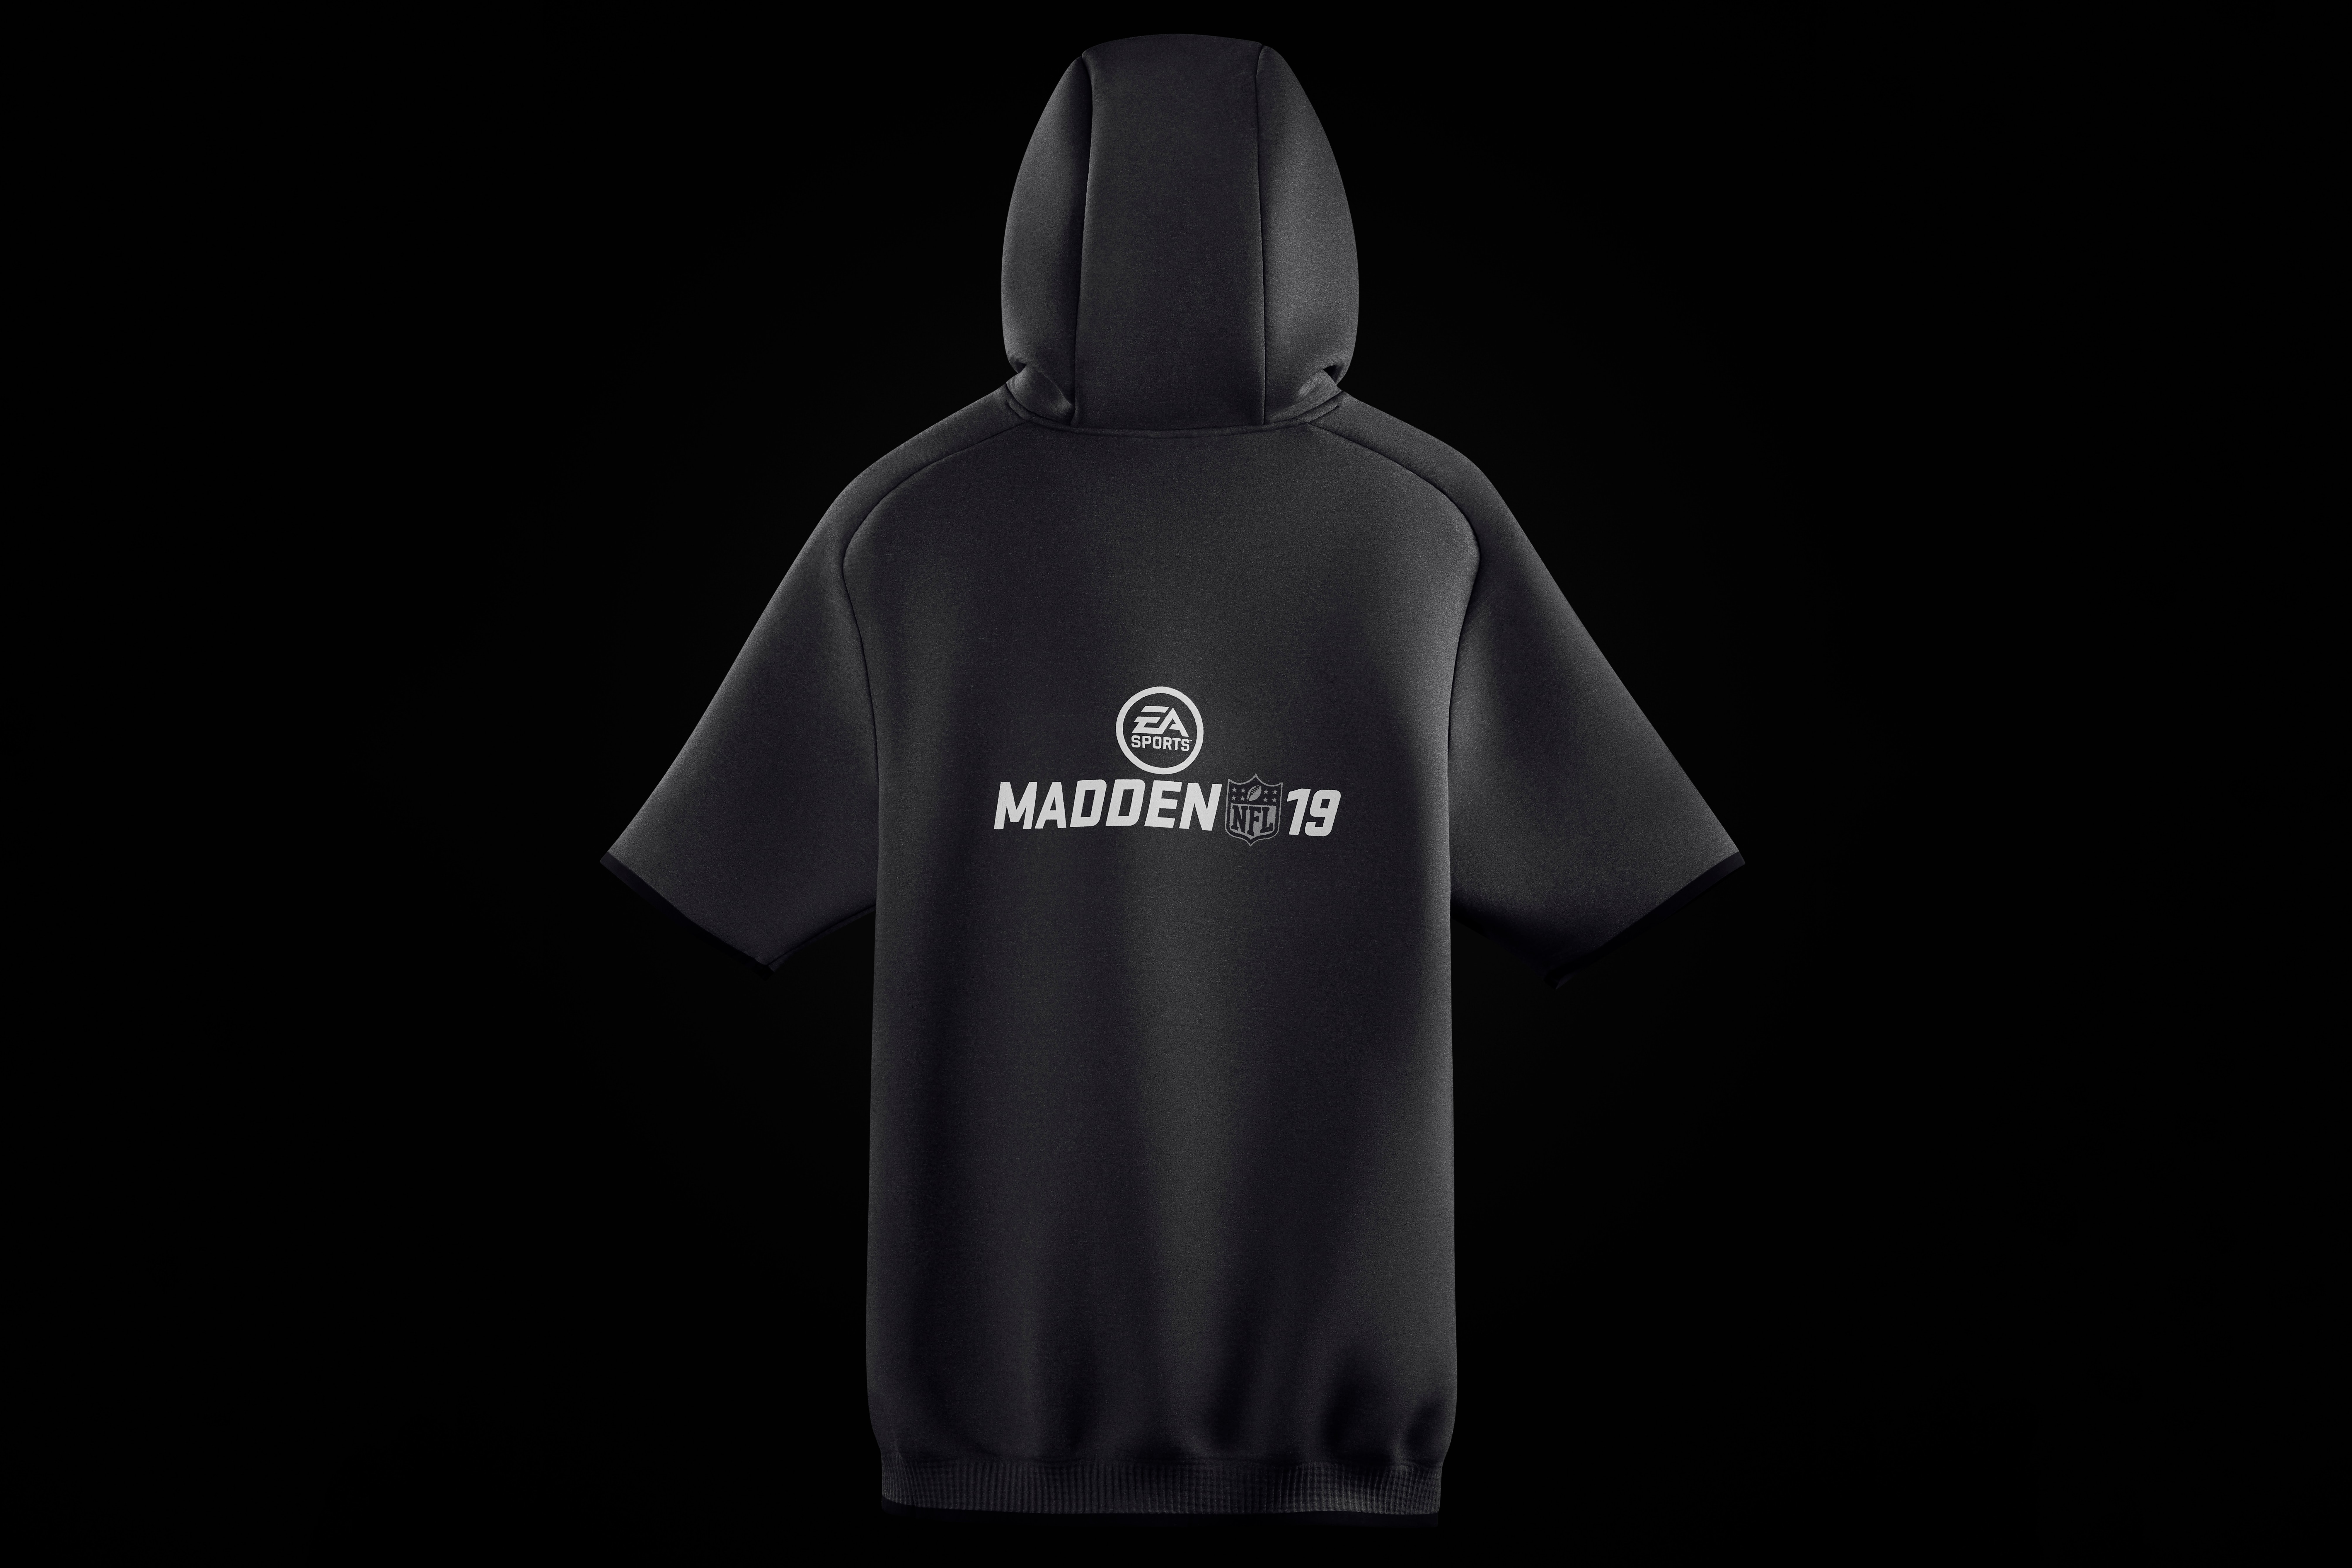 Nike EA Sports "Madden Pack" VaporMax Hoodie